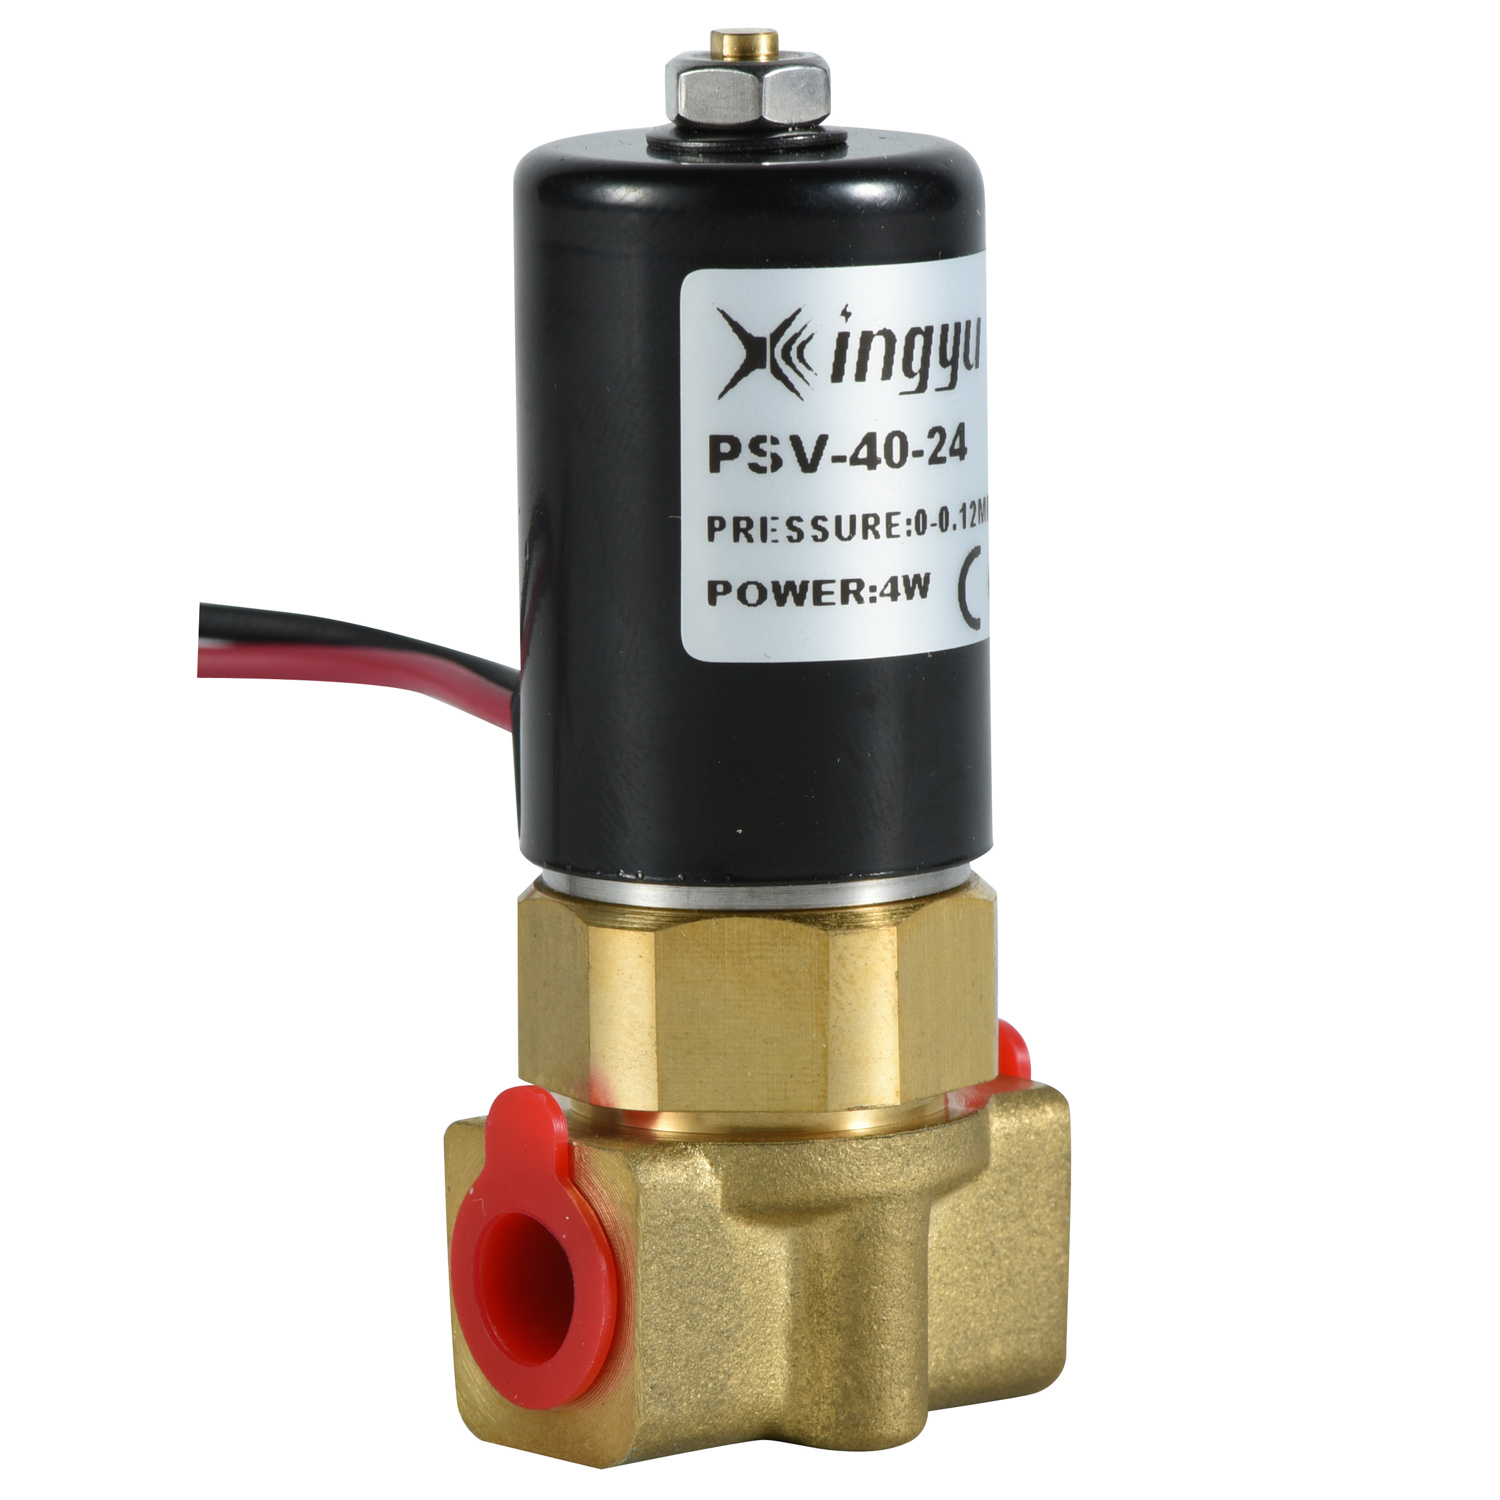  PSV-40-24 Miniature Electrical Proportional Flow Control Valve